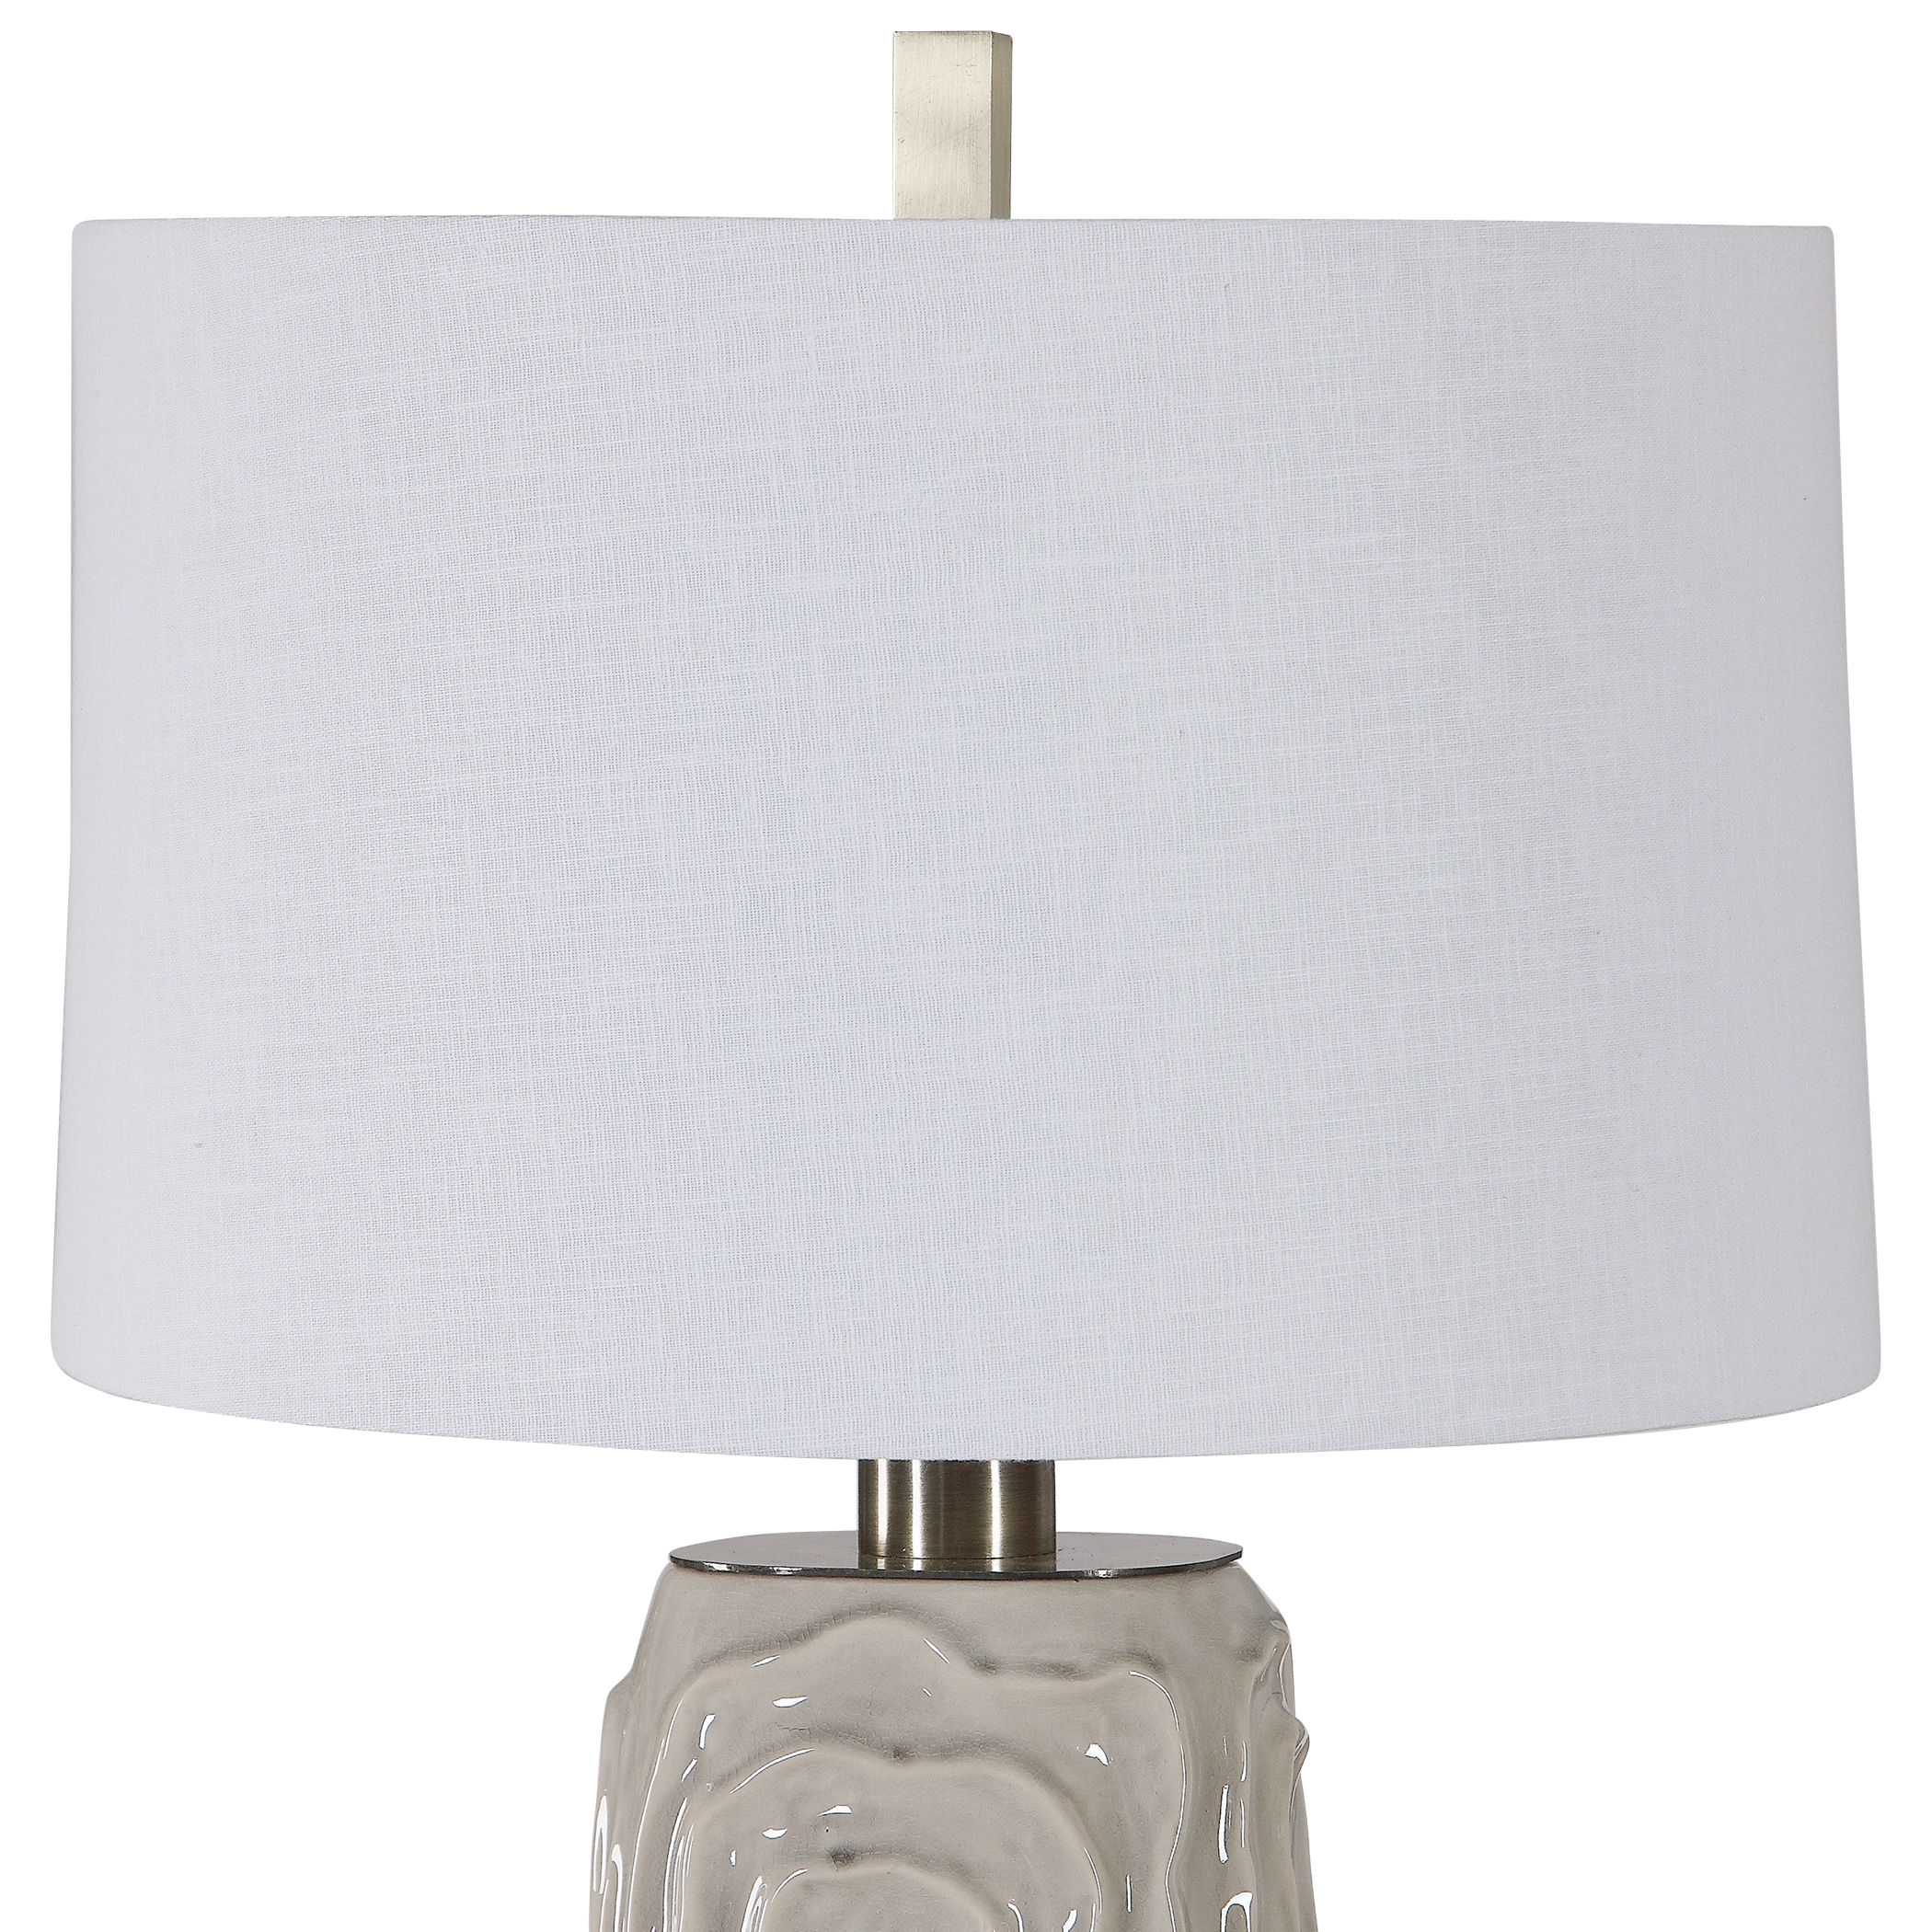 Zade Warm Gray Table Lamp - Image 3